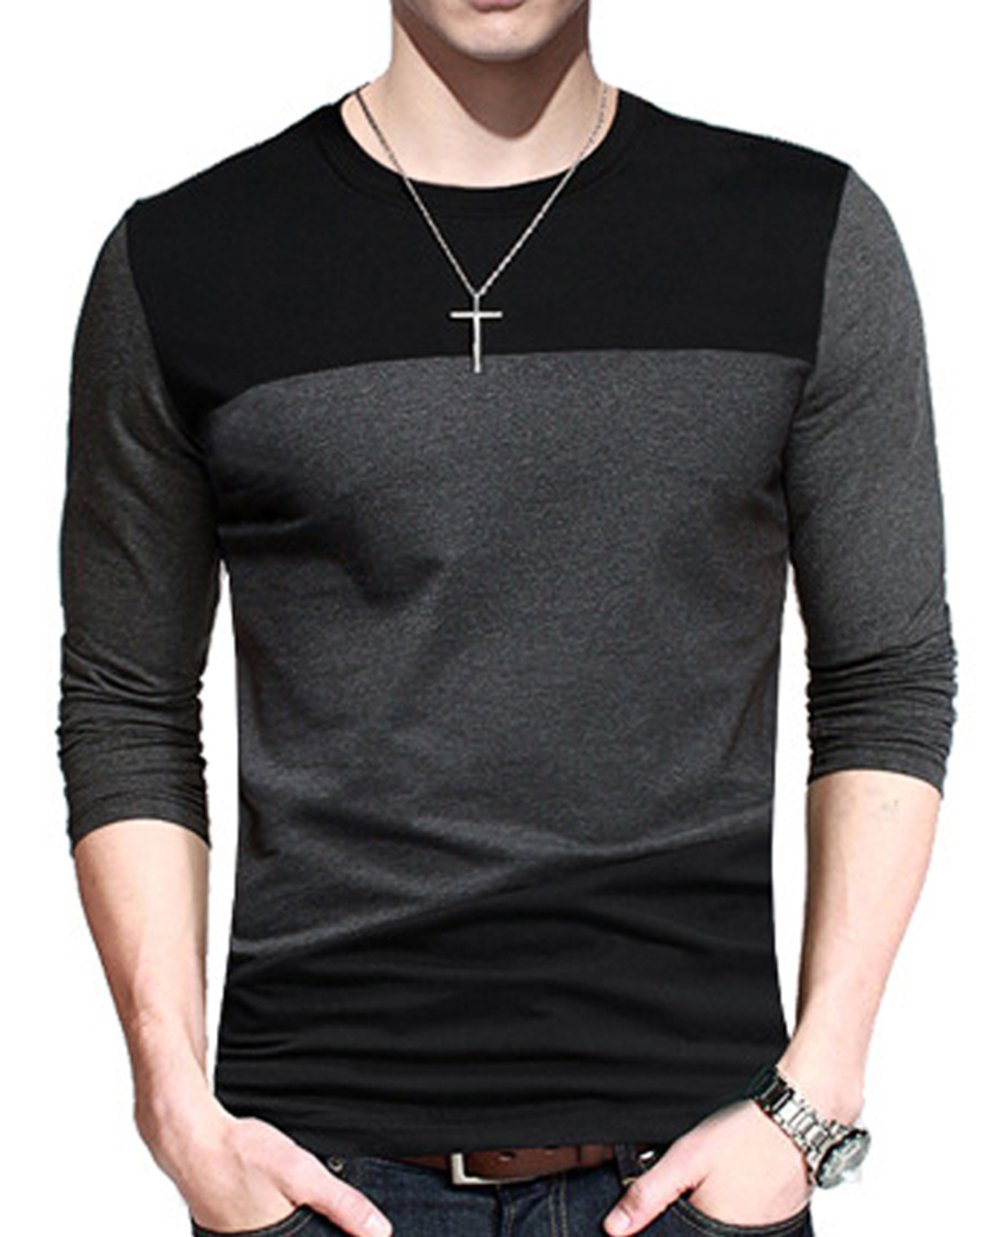 Yong Horse Men's Contrast Color Crew Neck Long Sleeve Basic T-Shirt Top Black-grey_2XL